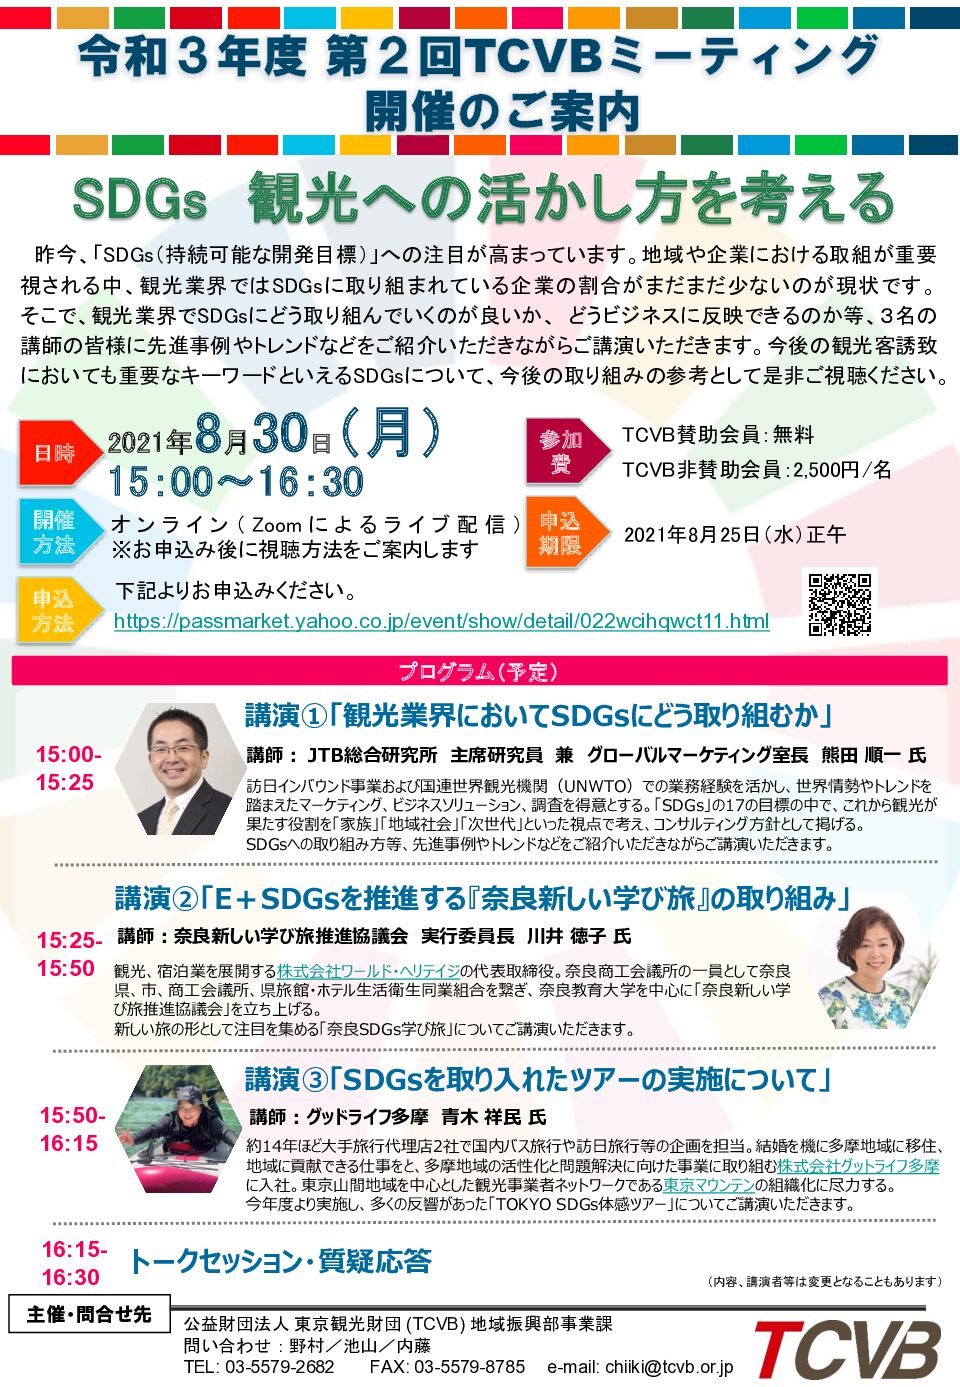 TCVB ミーティング「SDGs 観光への活かし方を考える」(東京観光財団主催)で、「E＋SDGsを推進する『奈良新しい学び旅』の取り組み」と題して川井実行委員長が講演